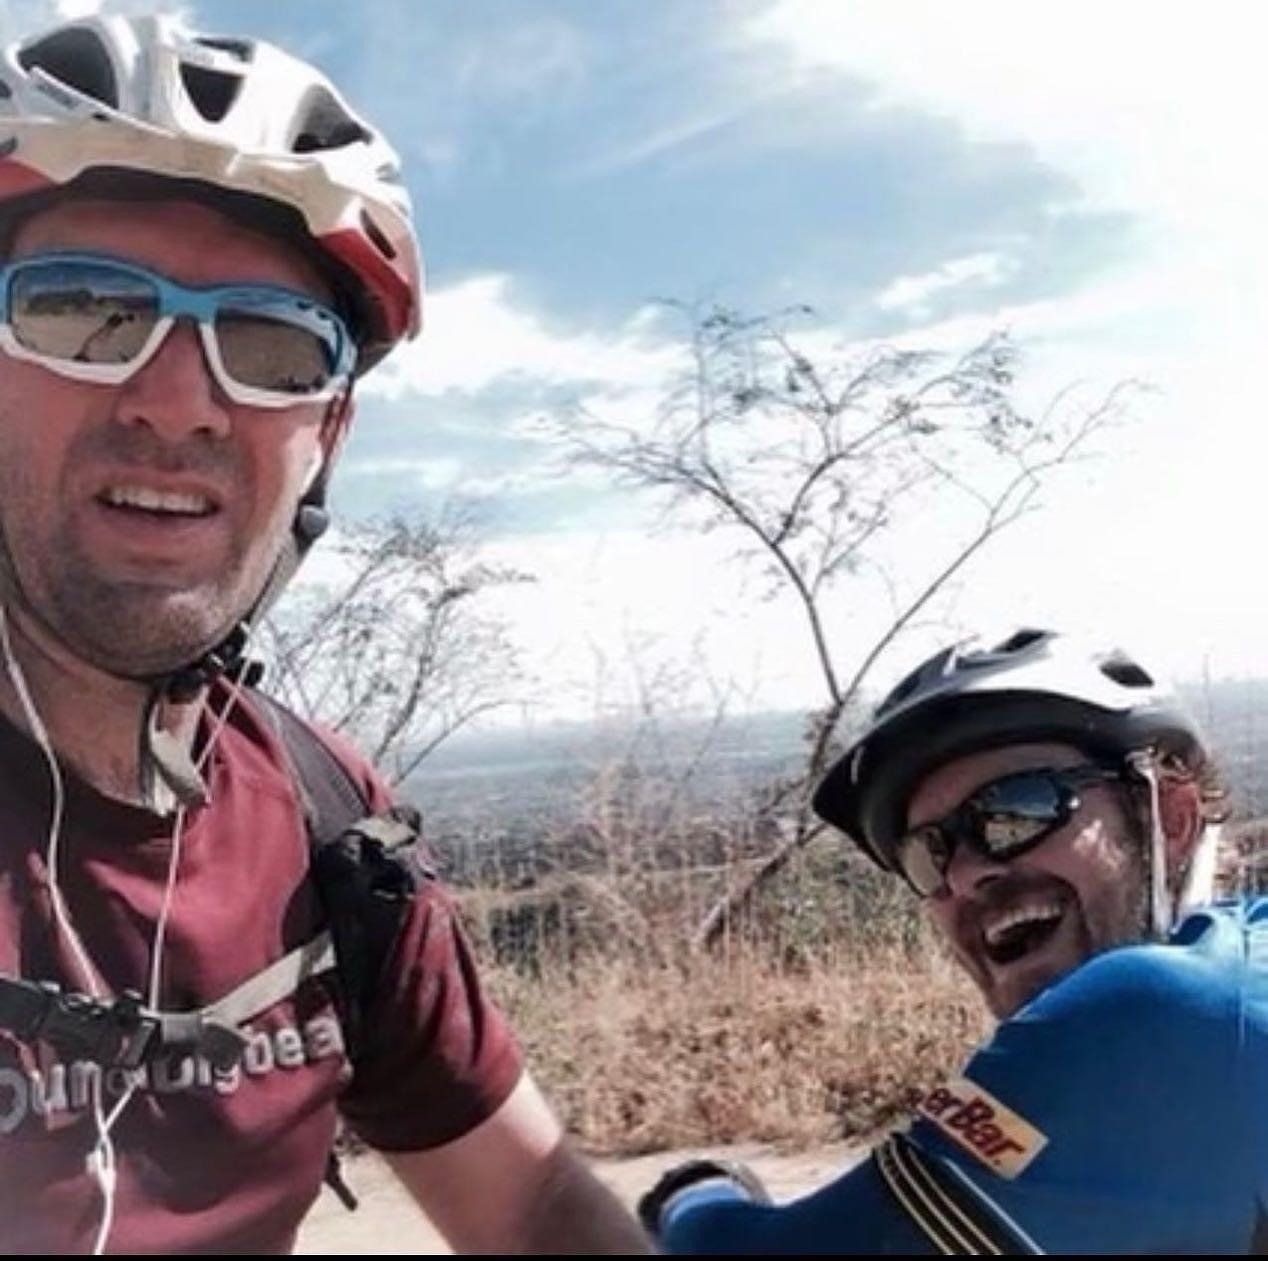 Adam and Matt Bullard smiling while on their bike